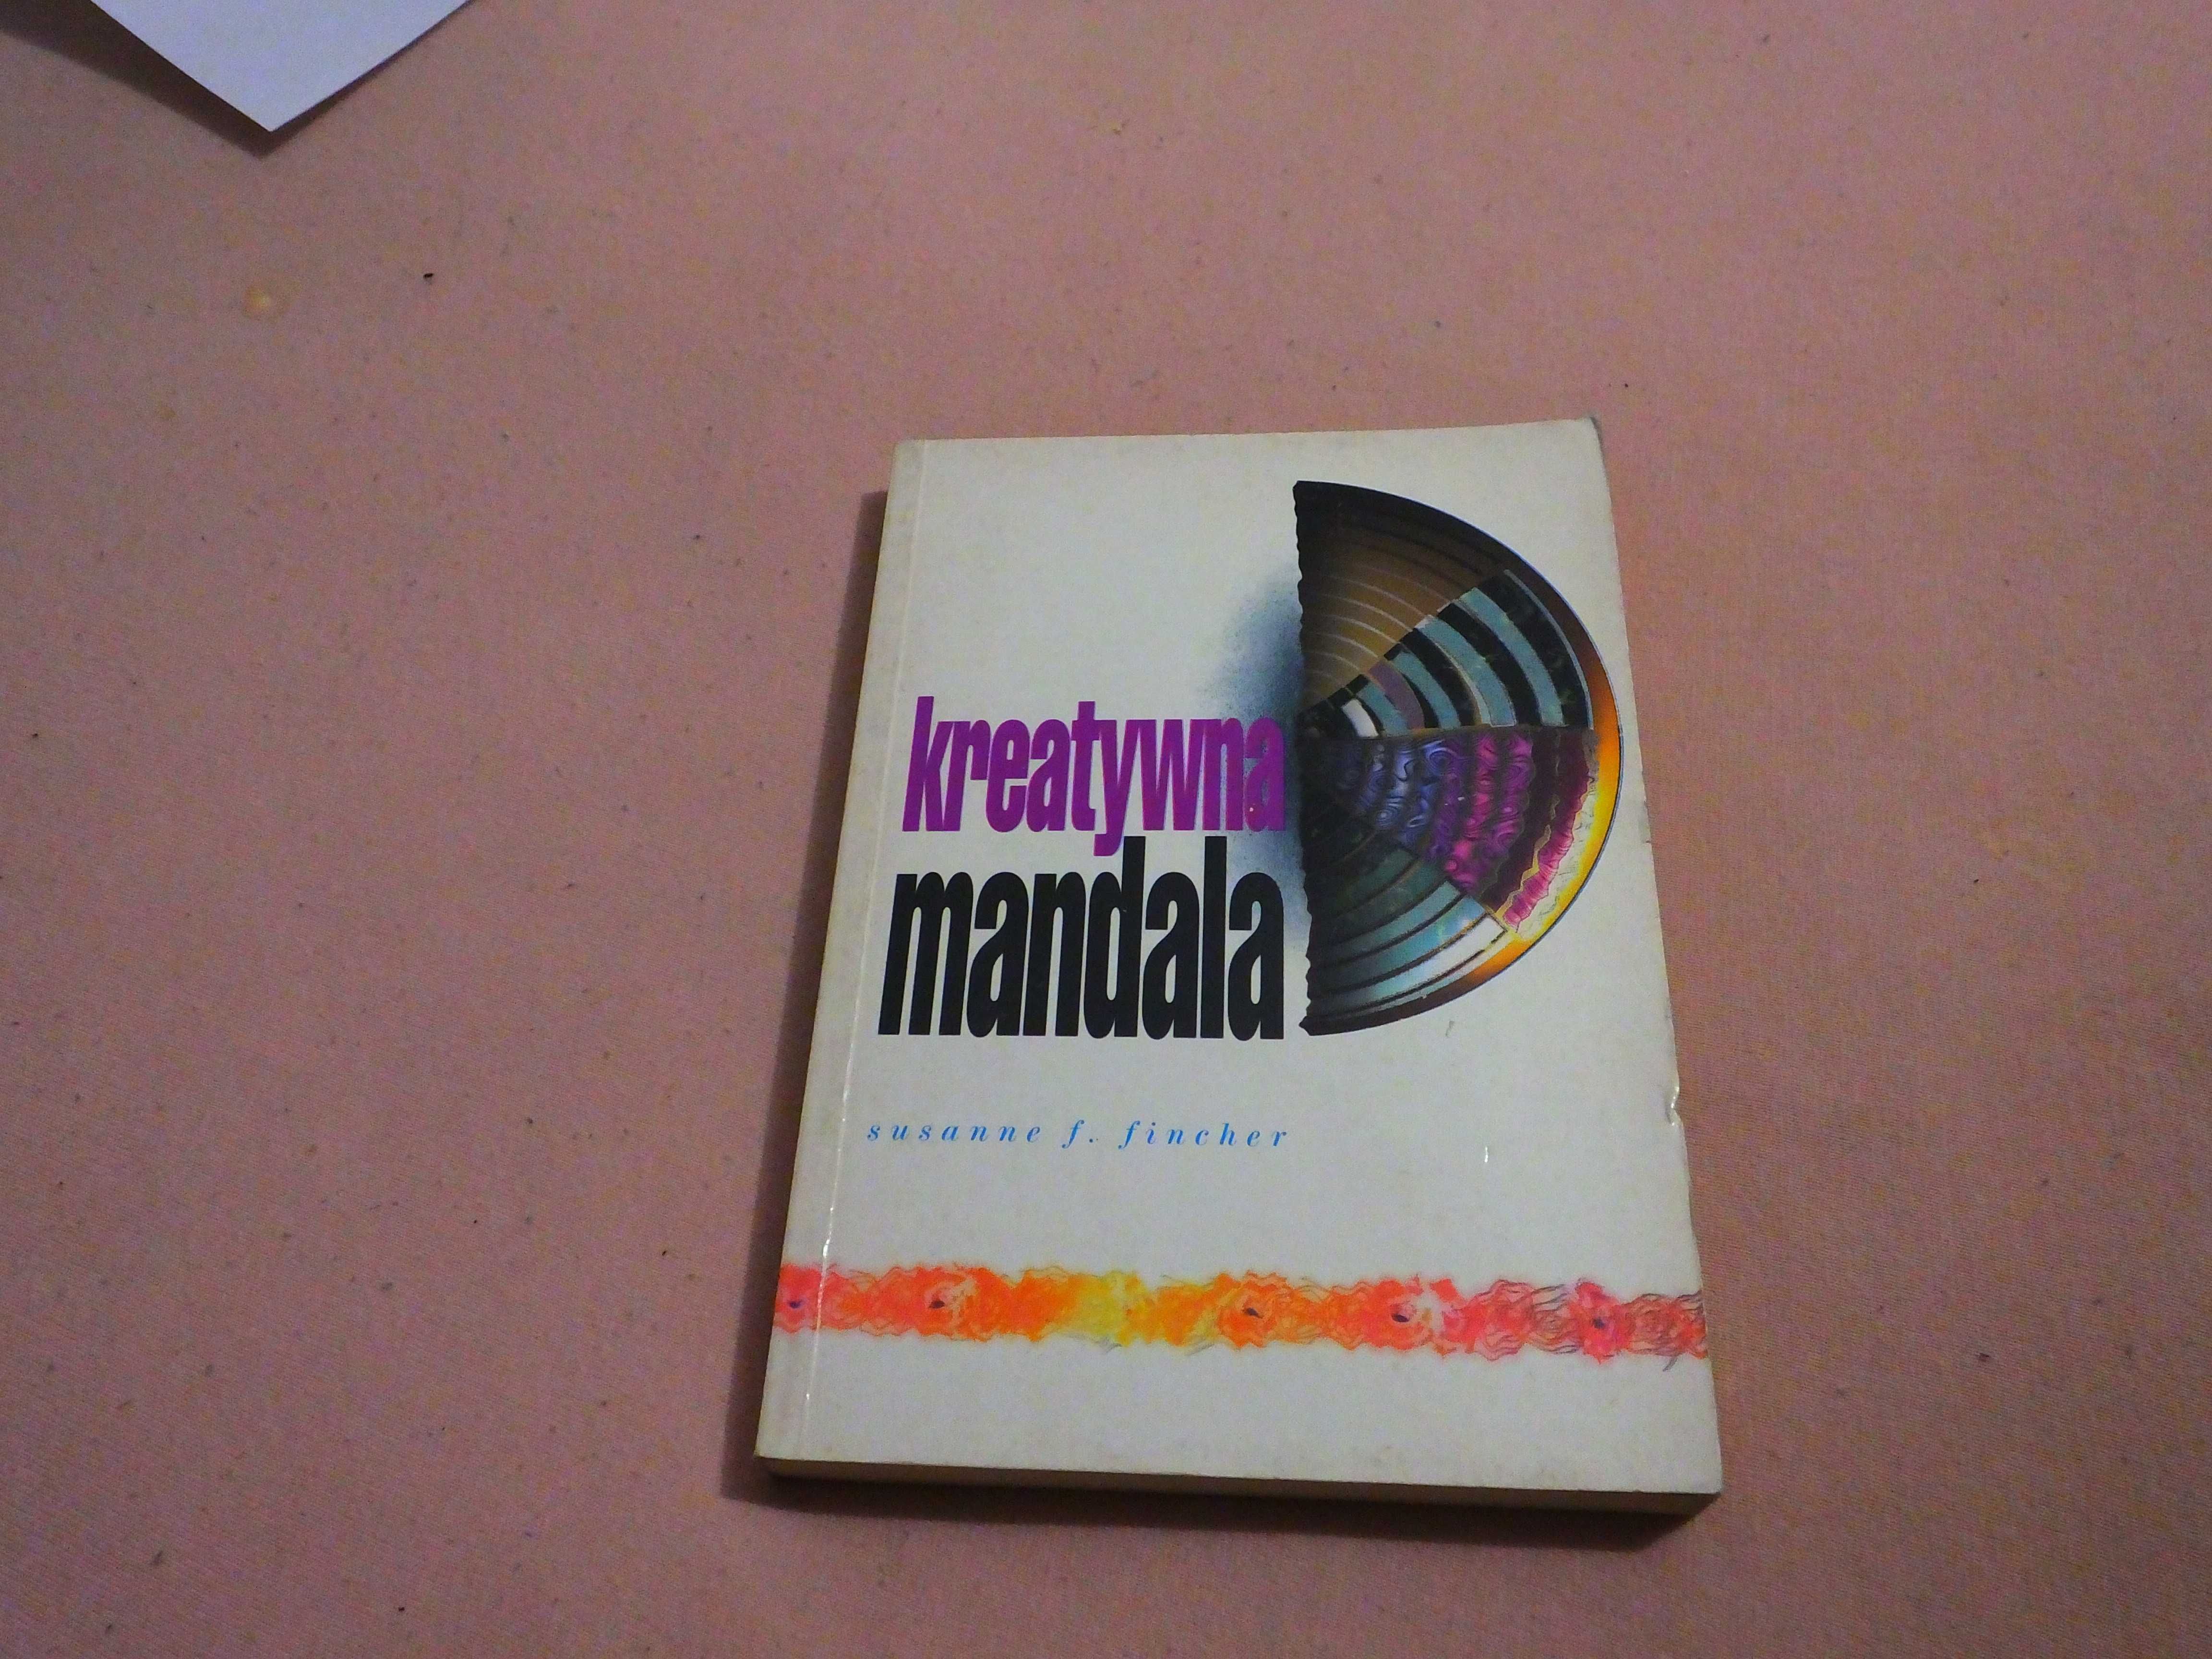 Książka "Kreatywna mandala"